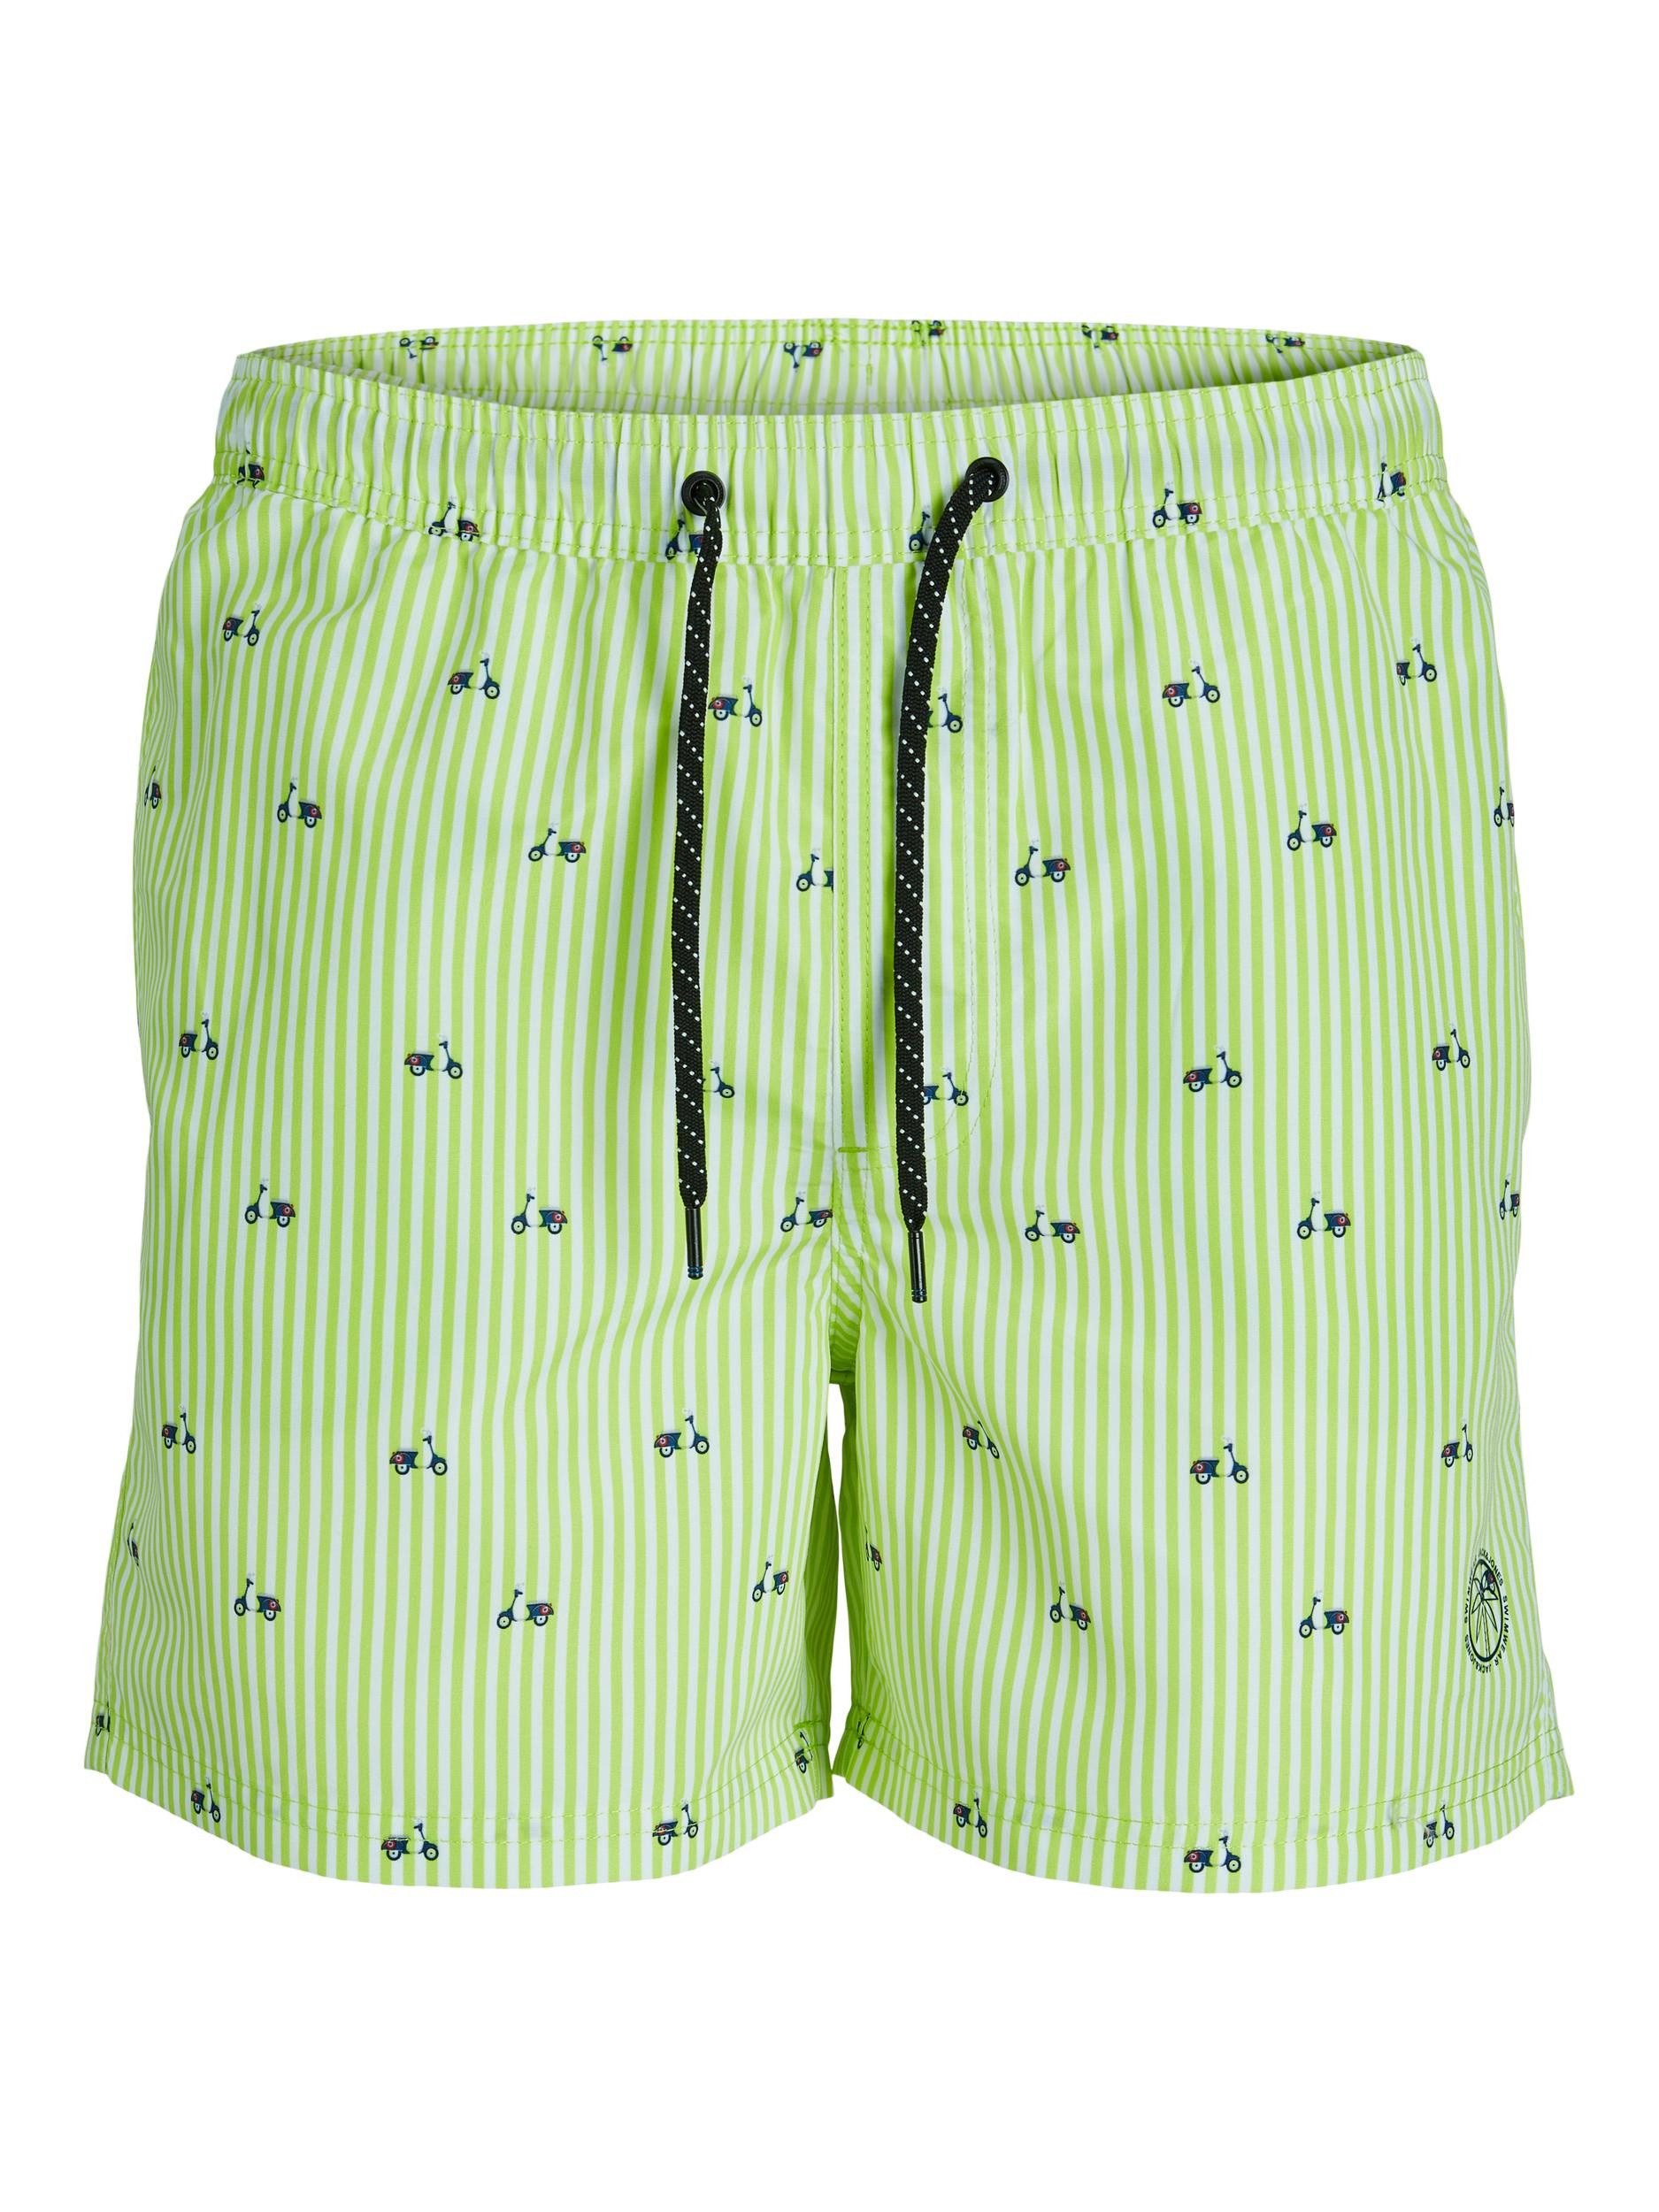 Jack & Jones - Regular fit striped swim trunks with print, Lime Green, large image number 0